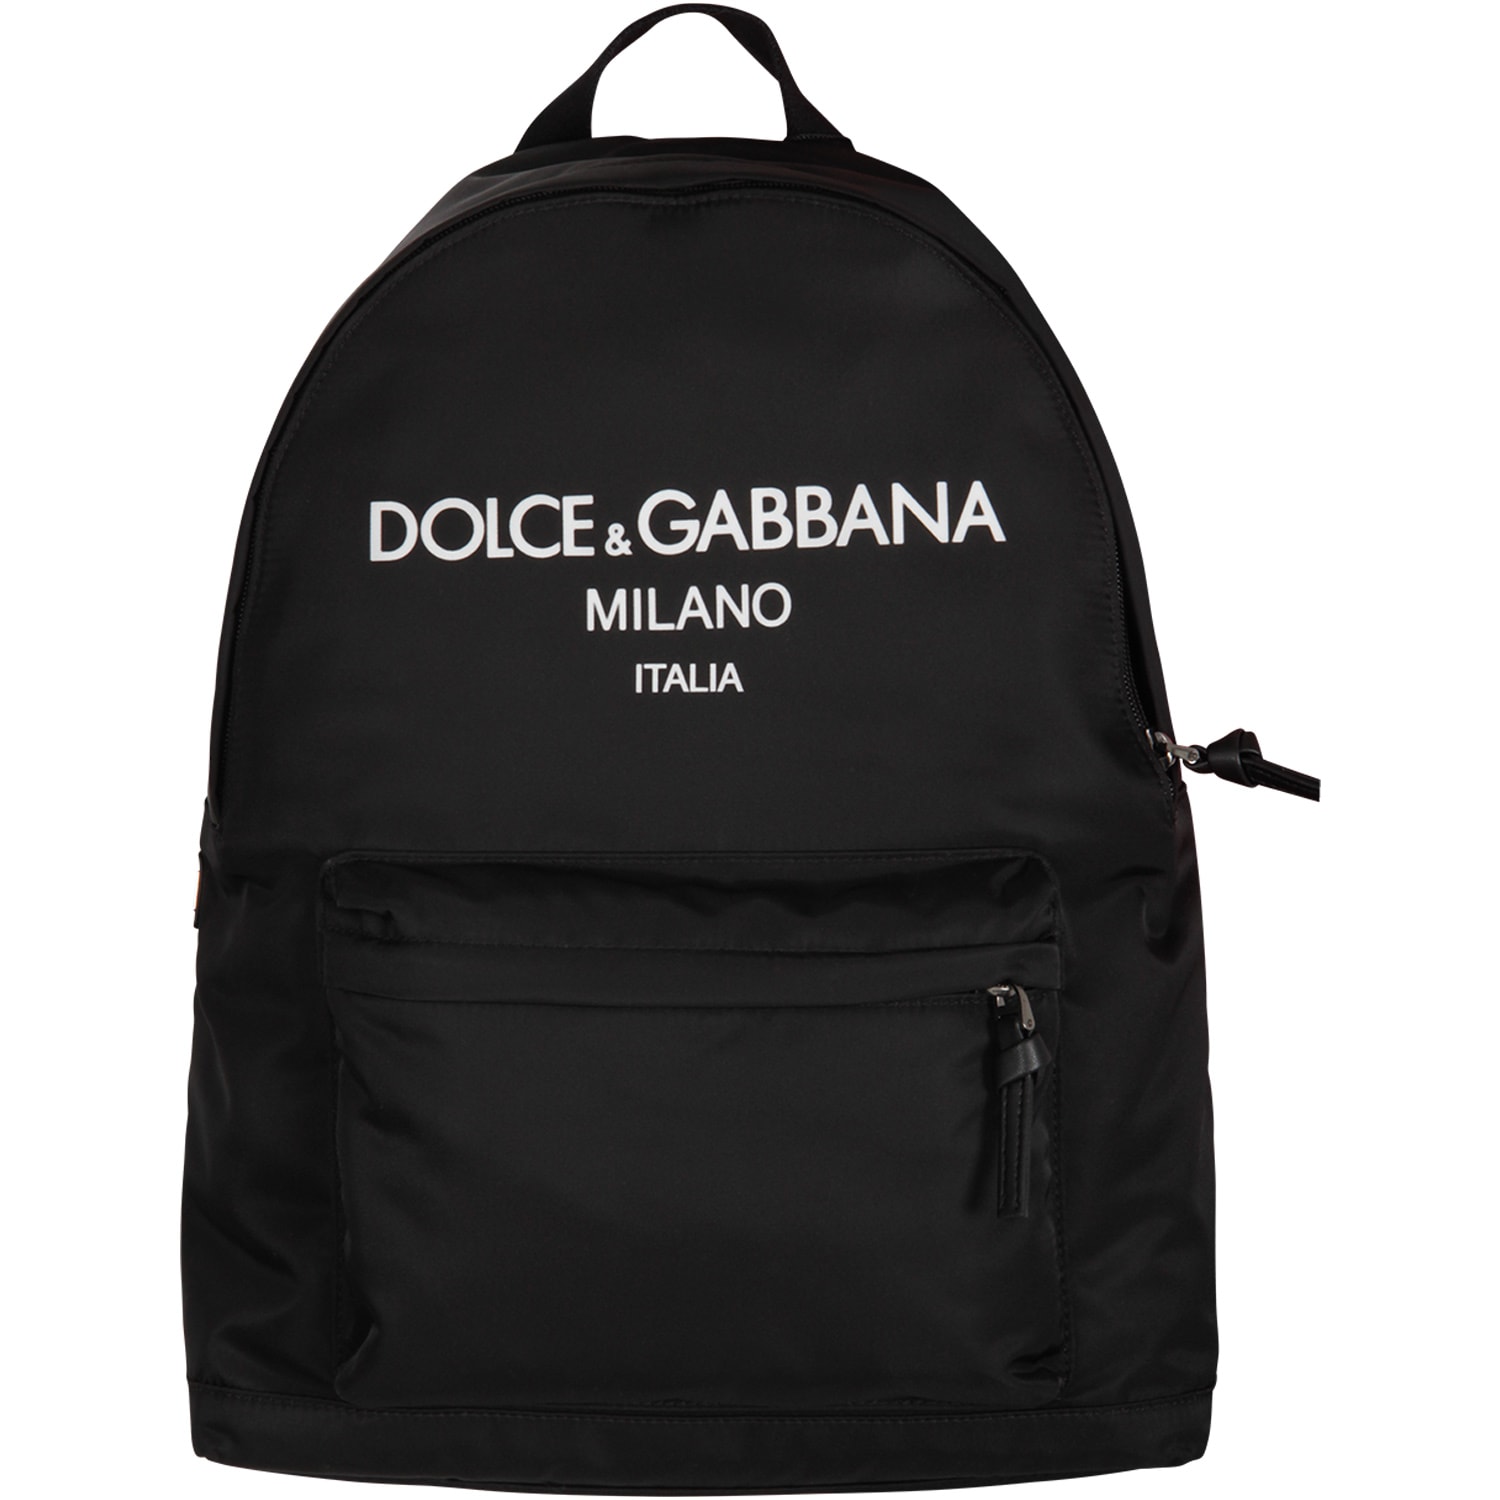 Dolce & Gabbana Black Backpack With White Logo For Kid